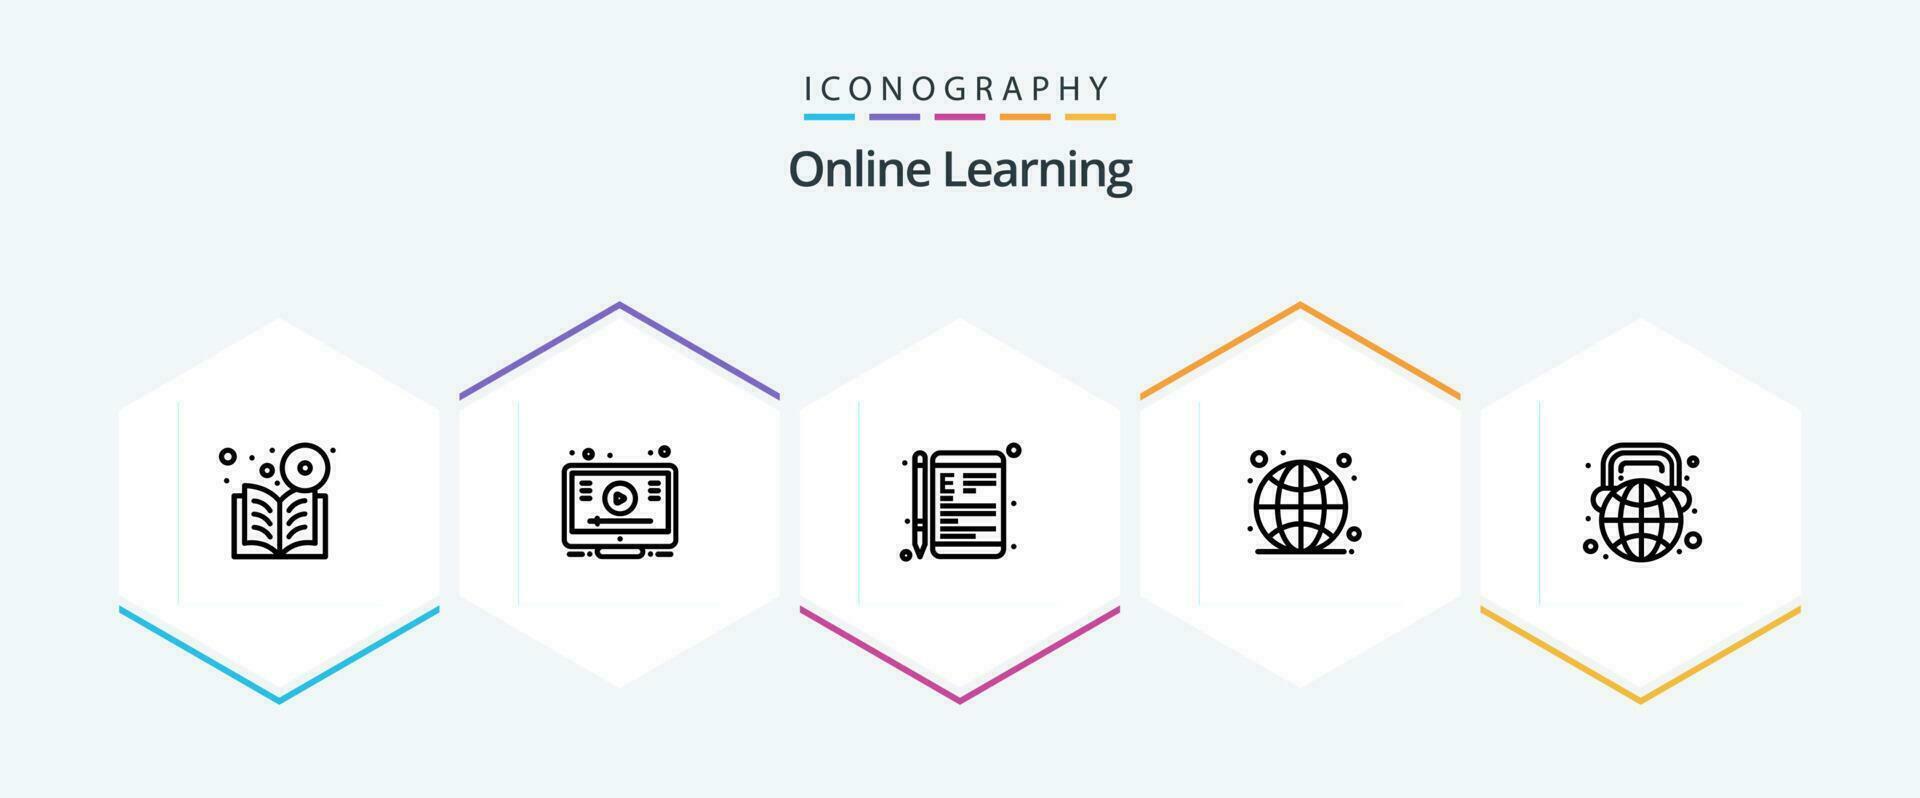 en ligne apprentissage 25 ligne icône pack comprenant en direct. globe. Youtube. mondial. éducation vecteur